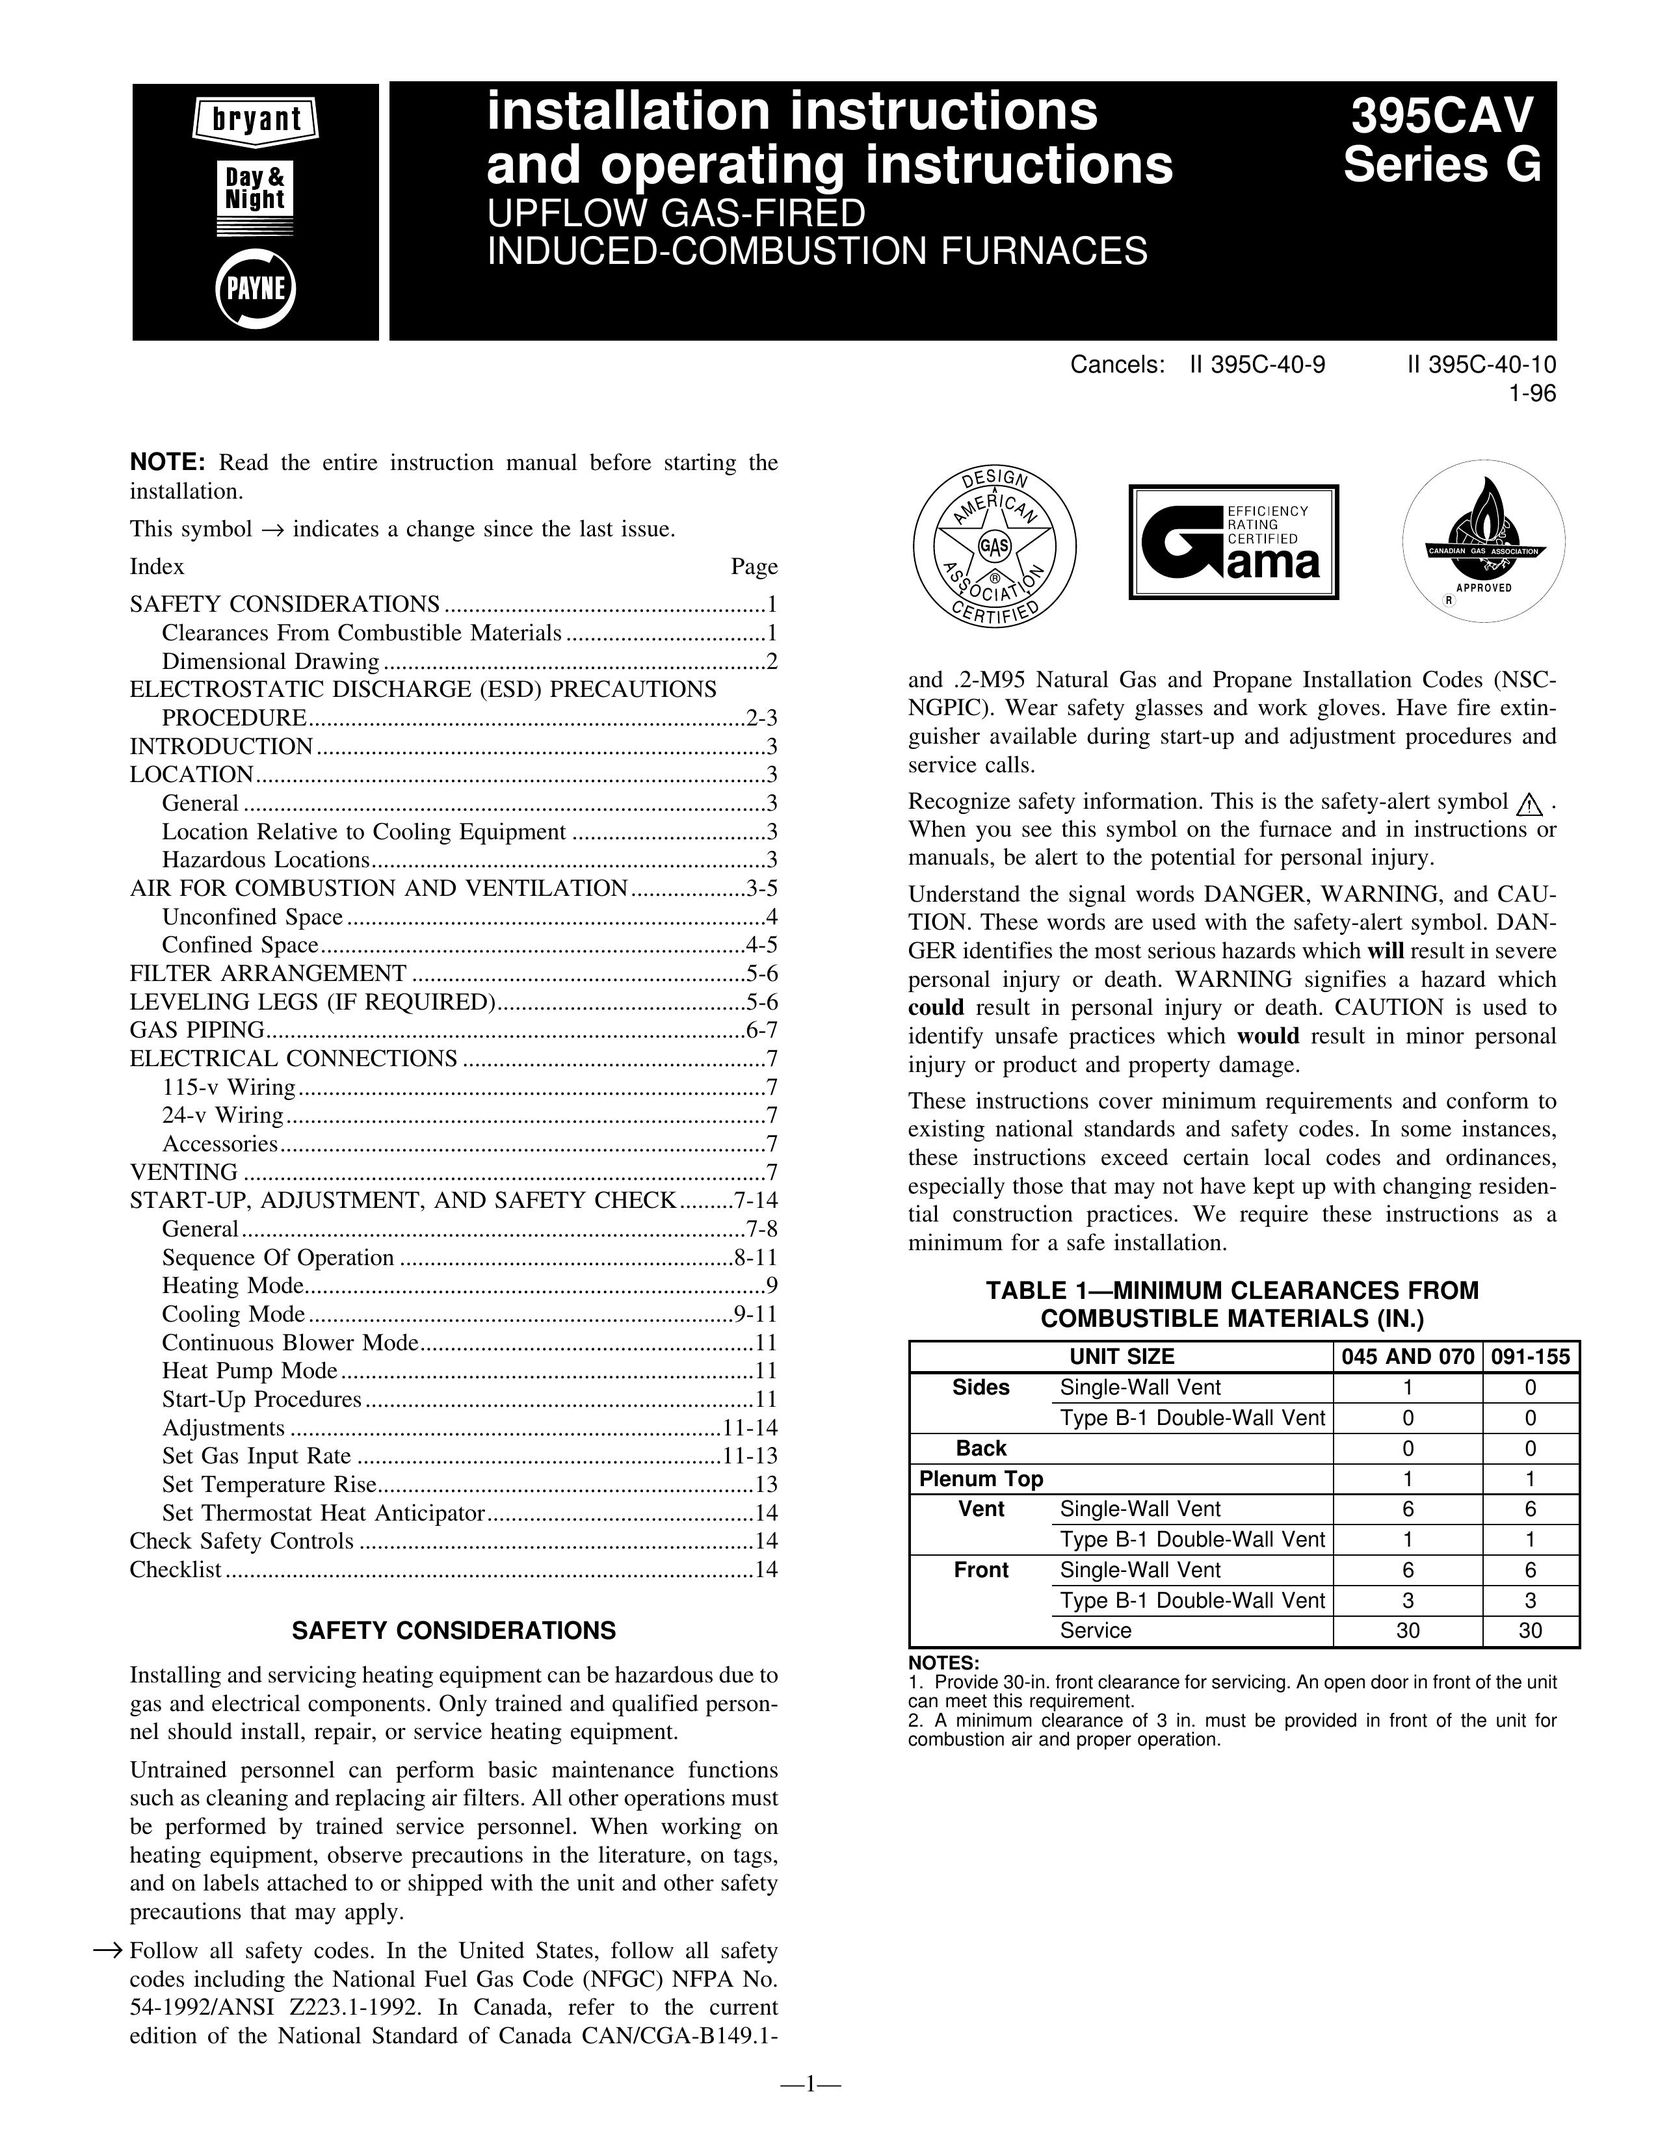 LG Electronics 395CAV Furnace User Manual